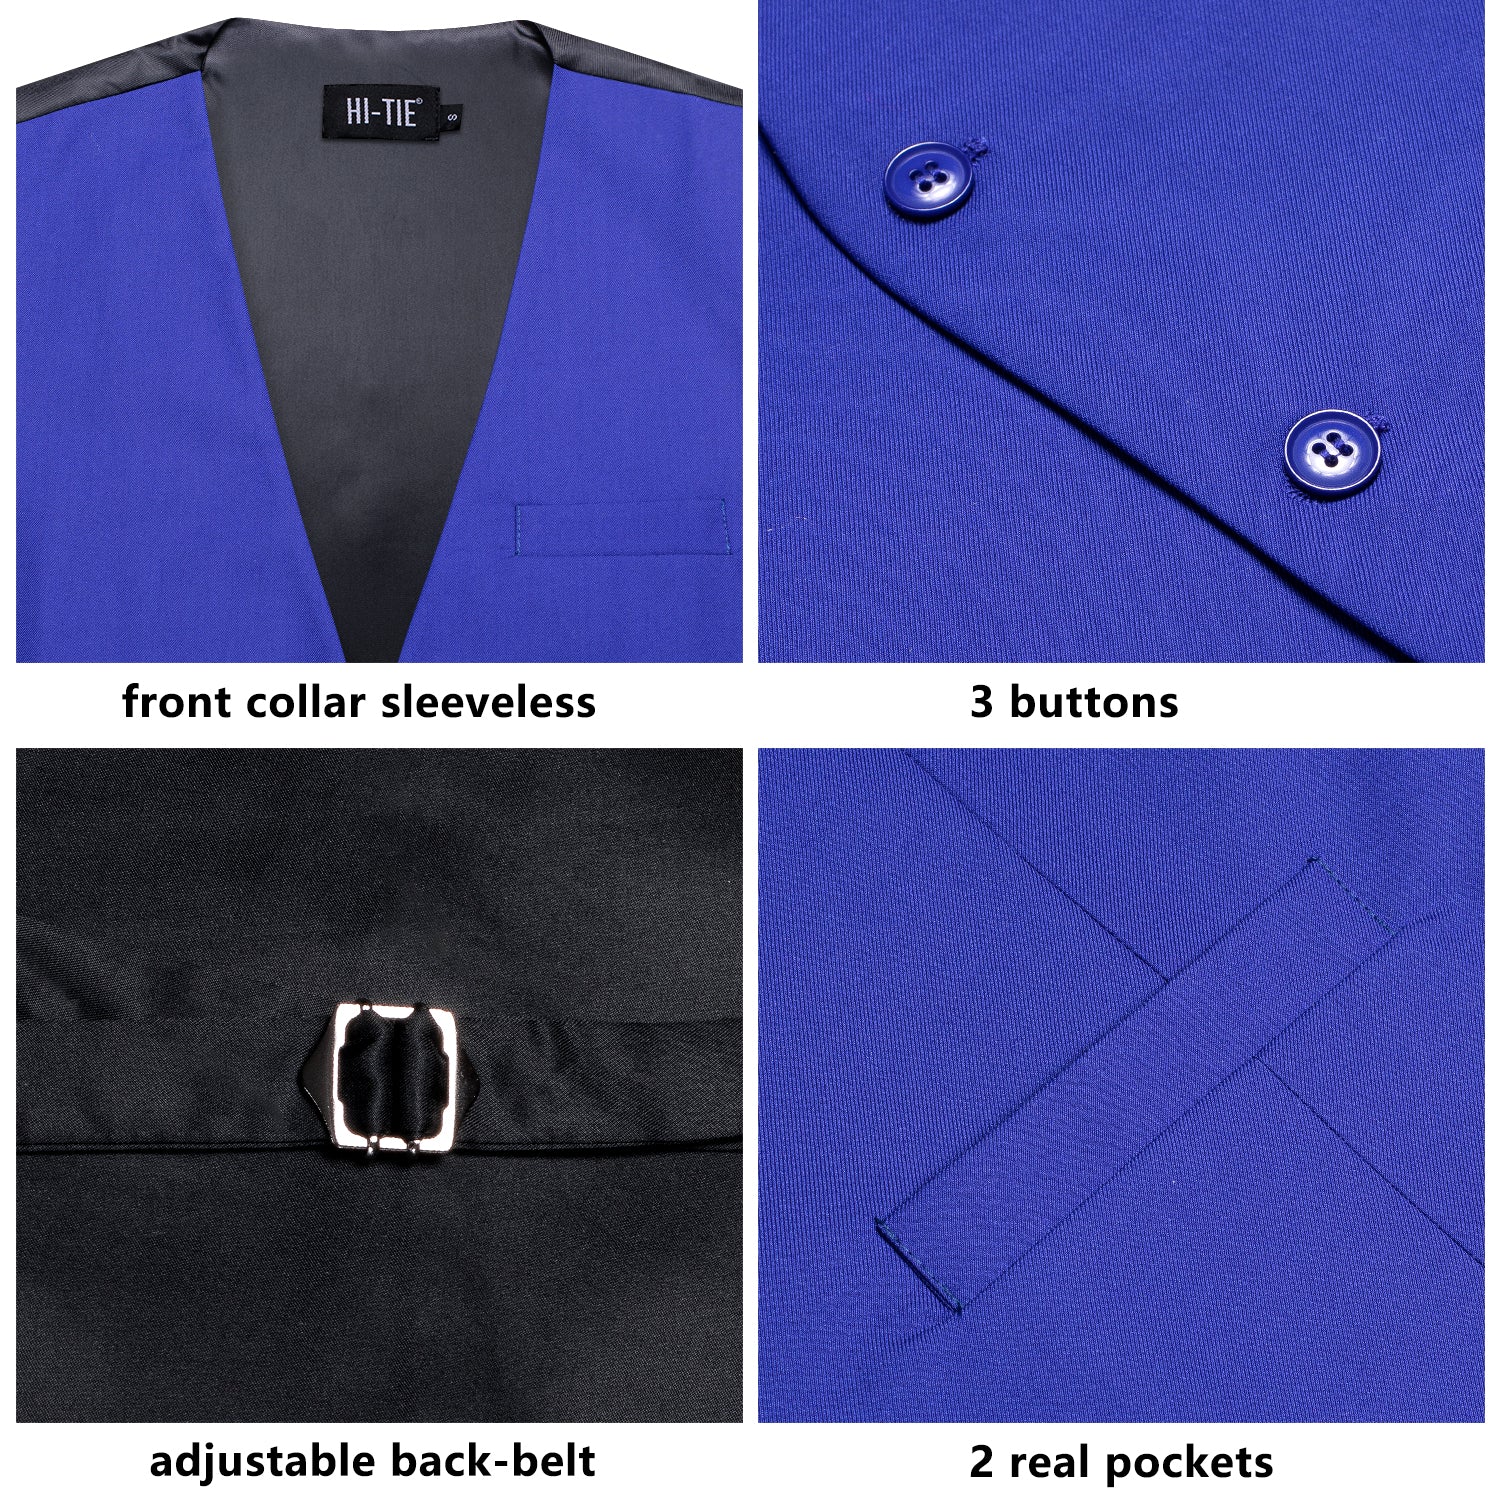 New Royal Blue Solid Silk Men's Single Vest Waistcoat